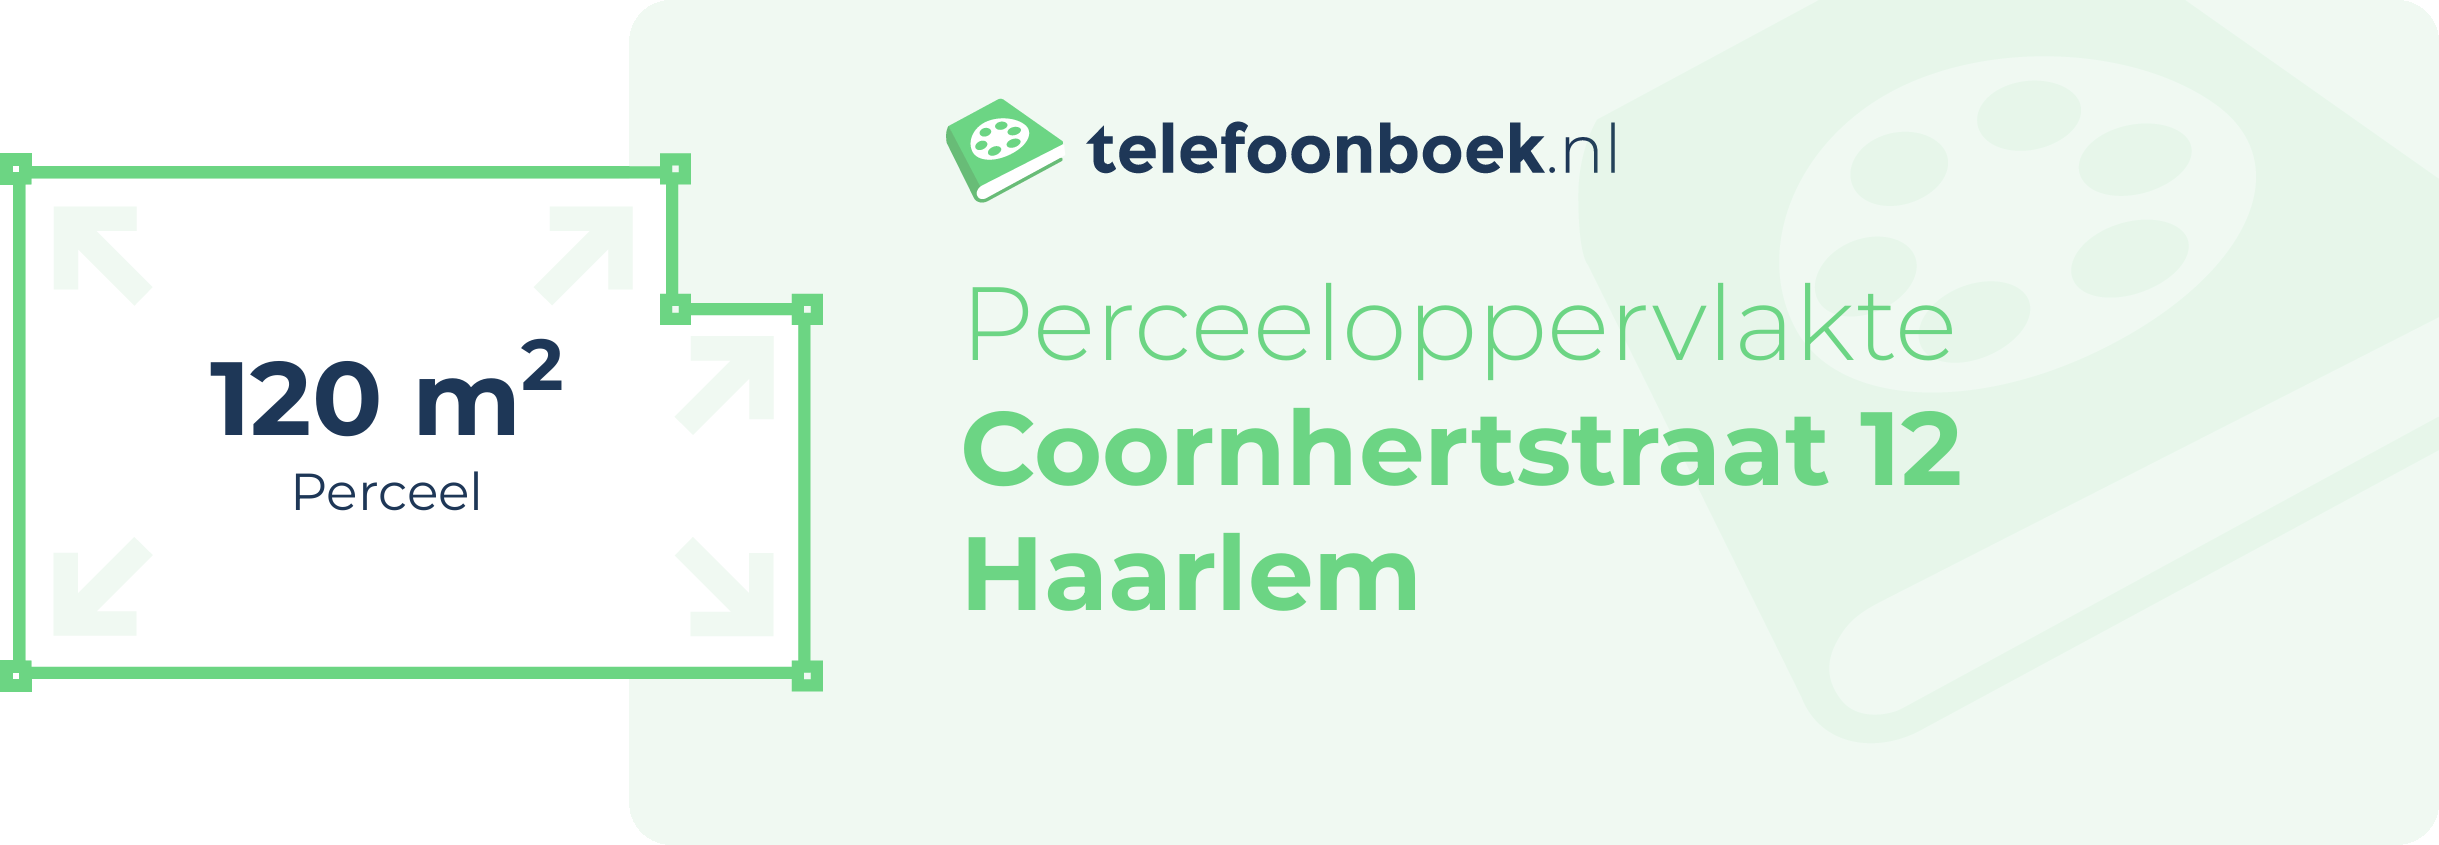 Perceeloppervlakte Coornhertstraat 12 Haarlem